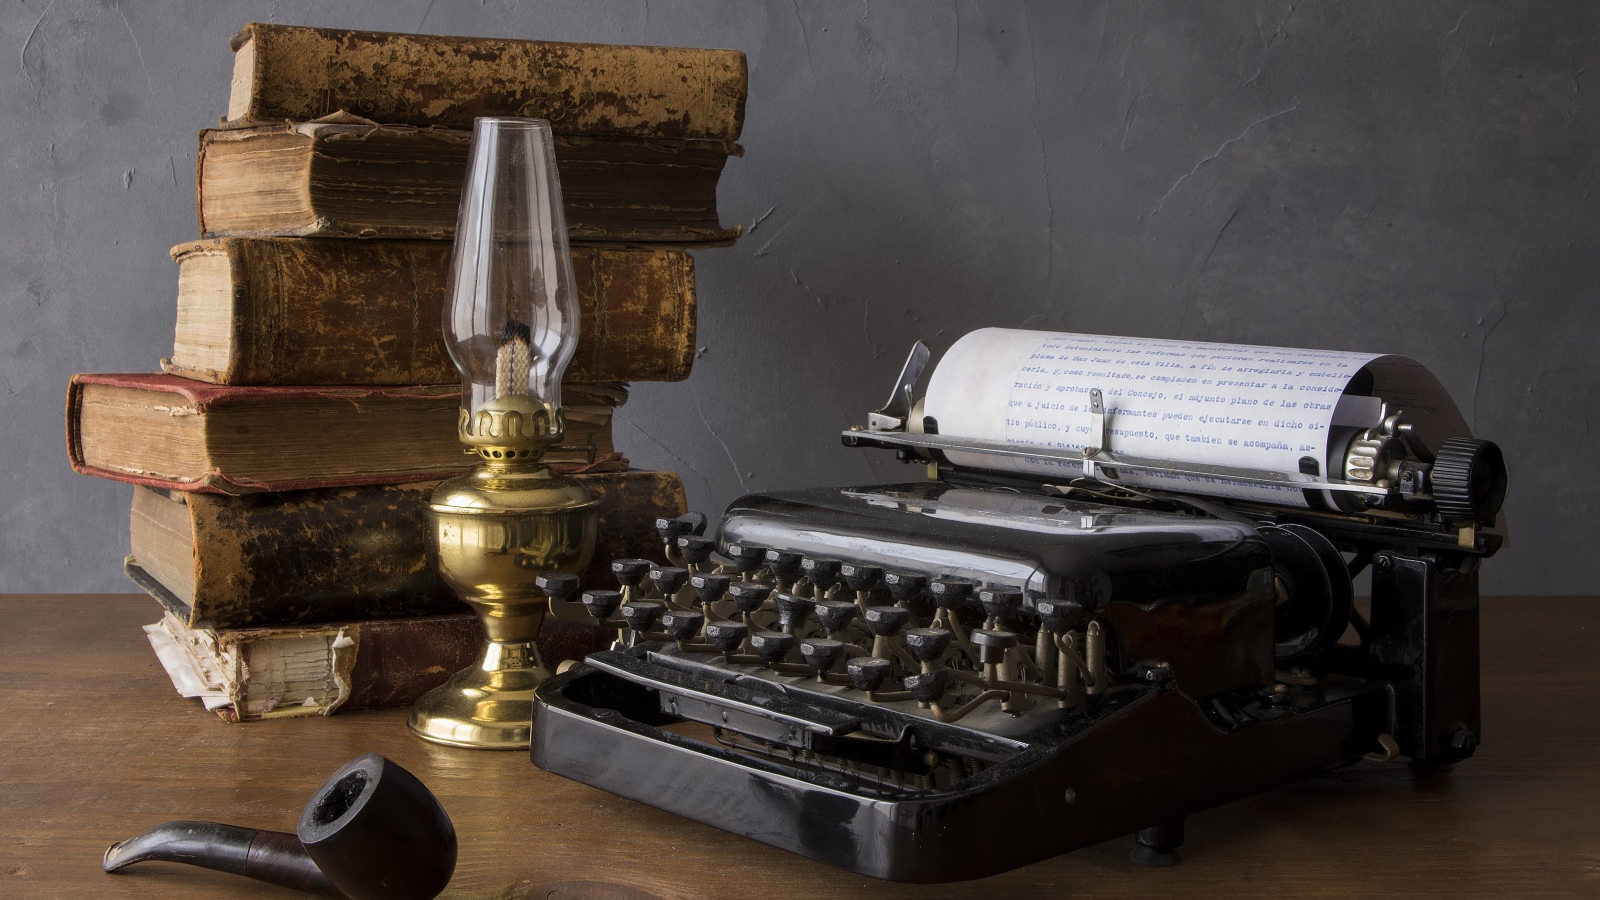 Old typewriter, books, kerosene lamp and tube on the table